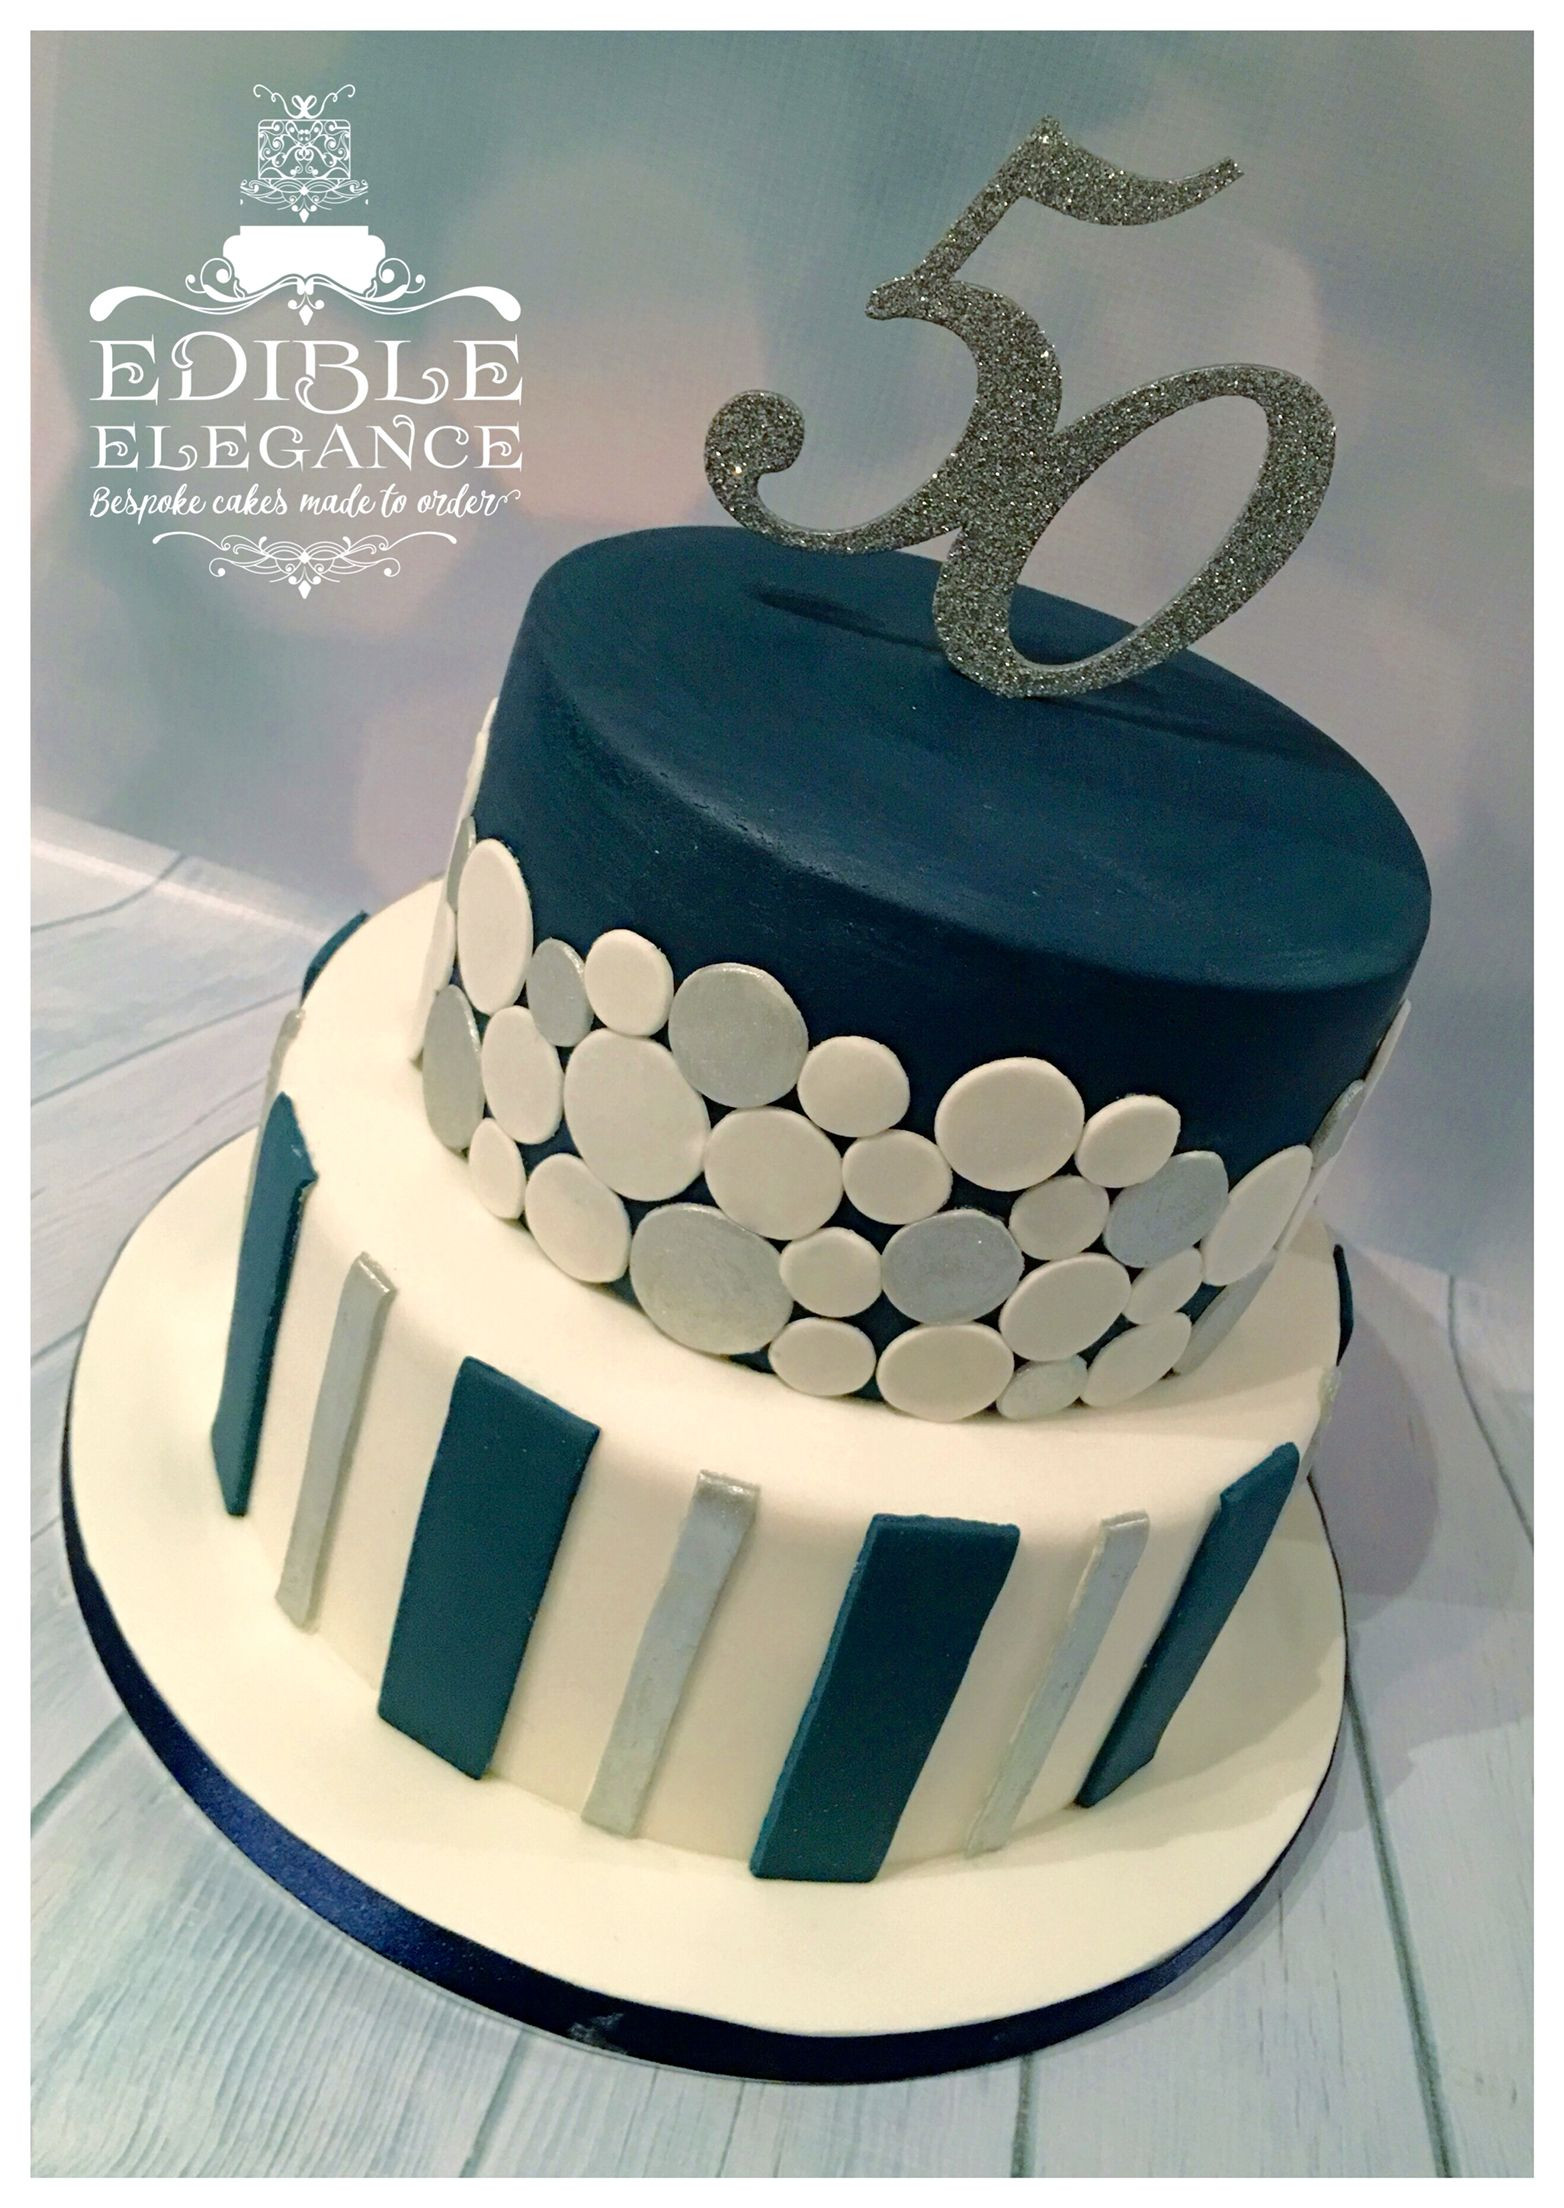 Mens Birthday Cake Decorating
 50th birthday cake contemporary design in masculine blue